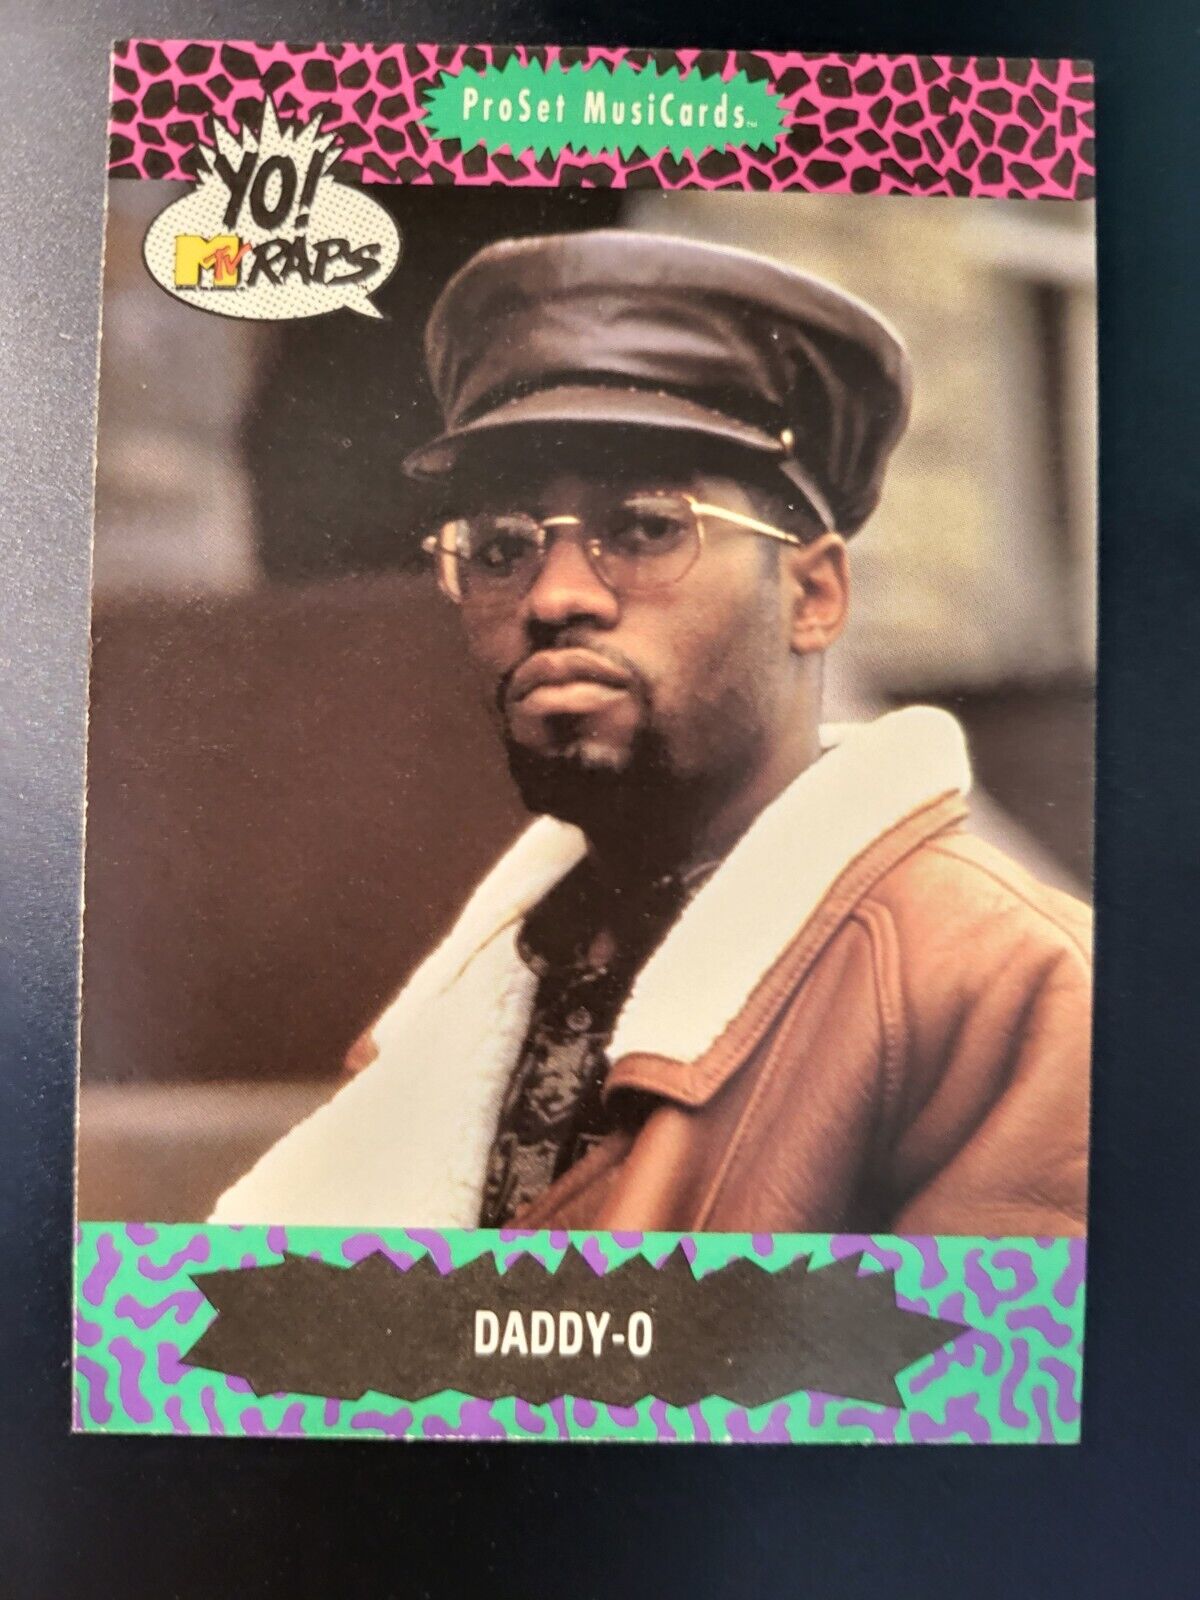 1991 ProSet MusiCards YO MTV Raps Daddy-o RC card #112